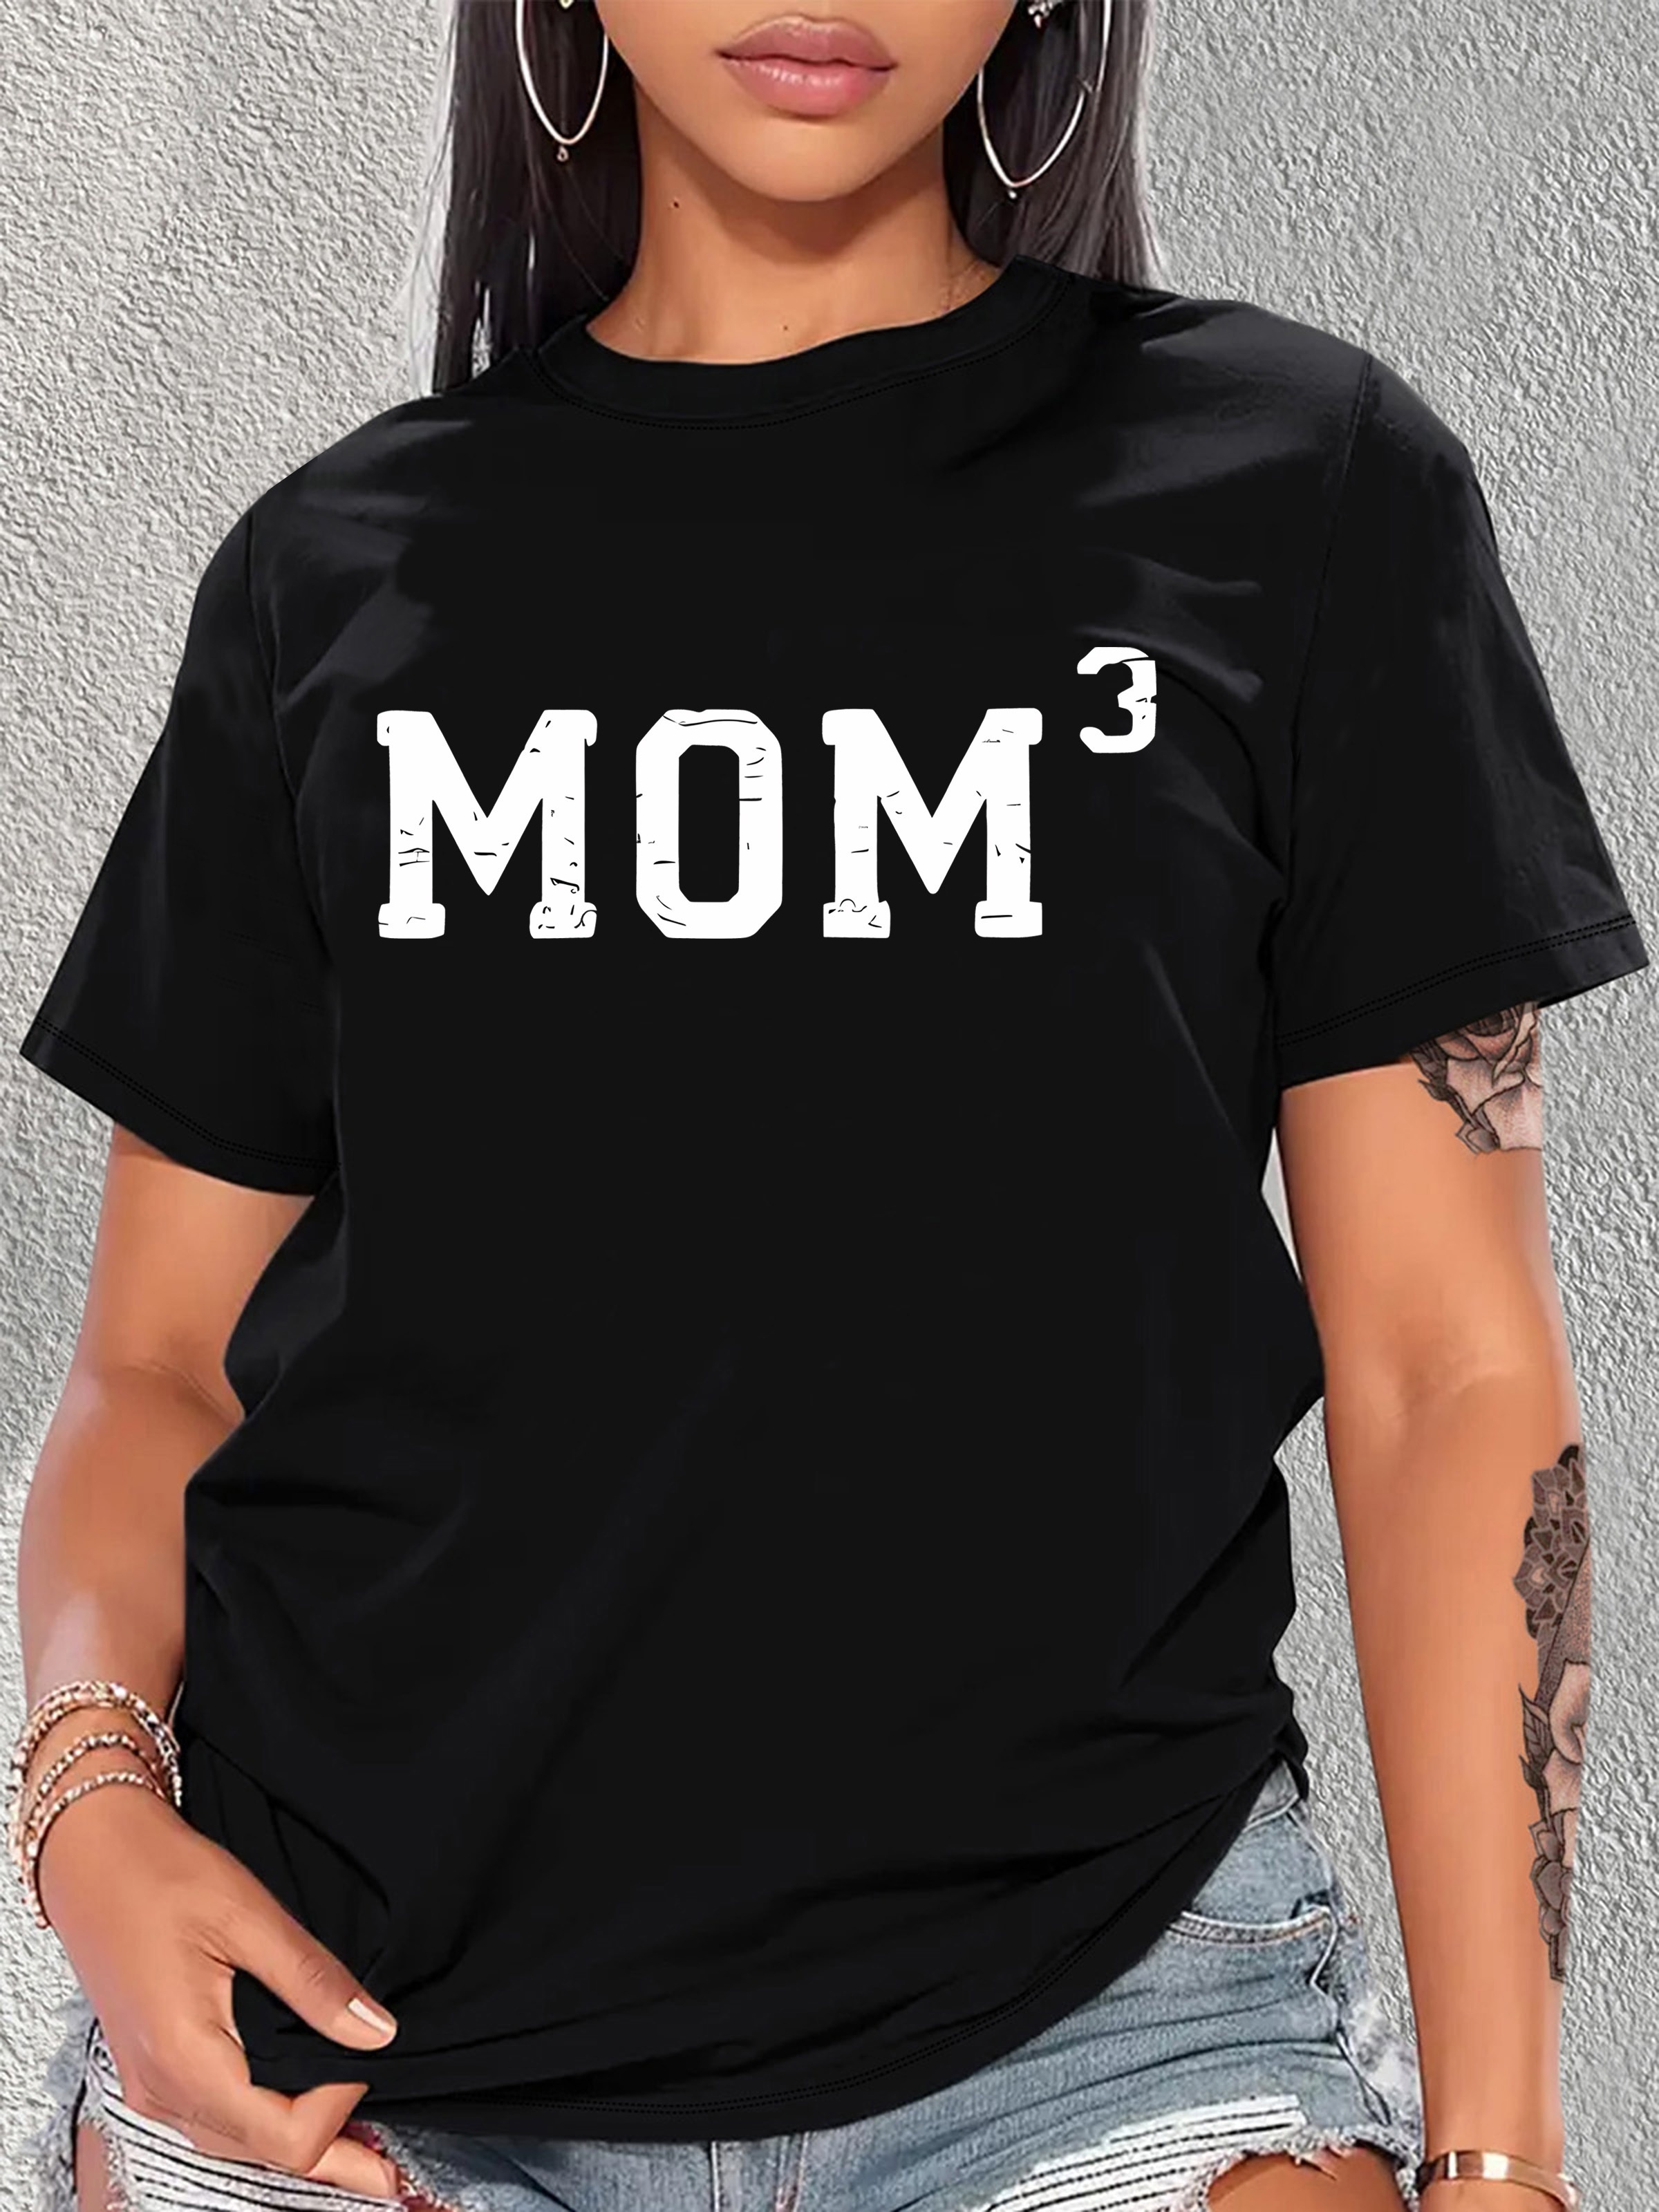 mom print t shirt crew neck short sleeve t shirt casual sport tops womens clothing details 0